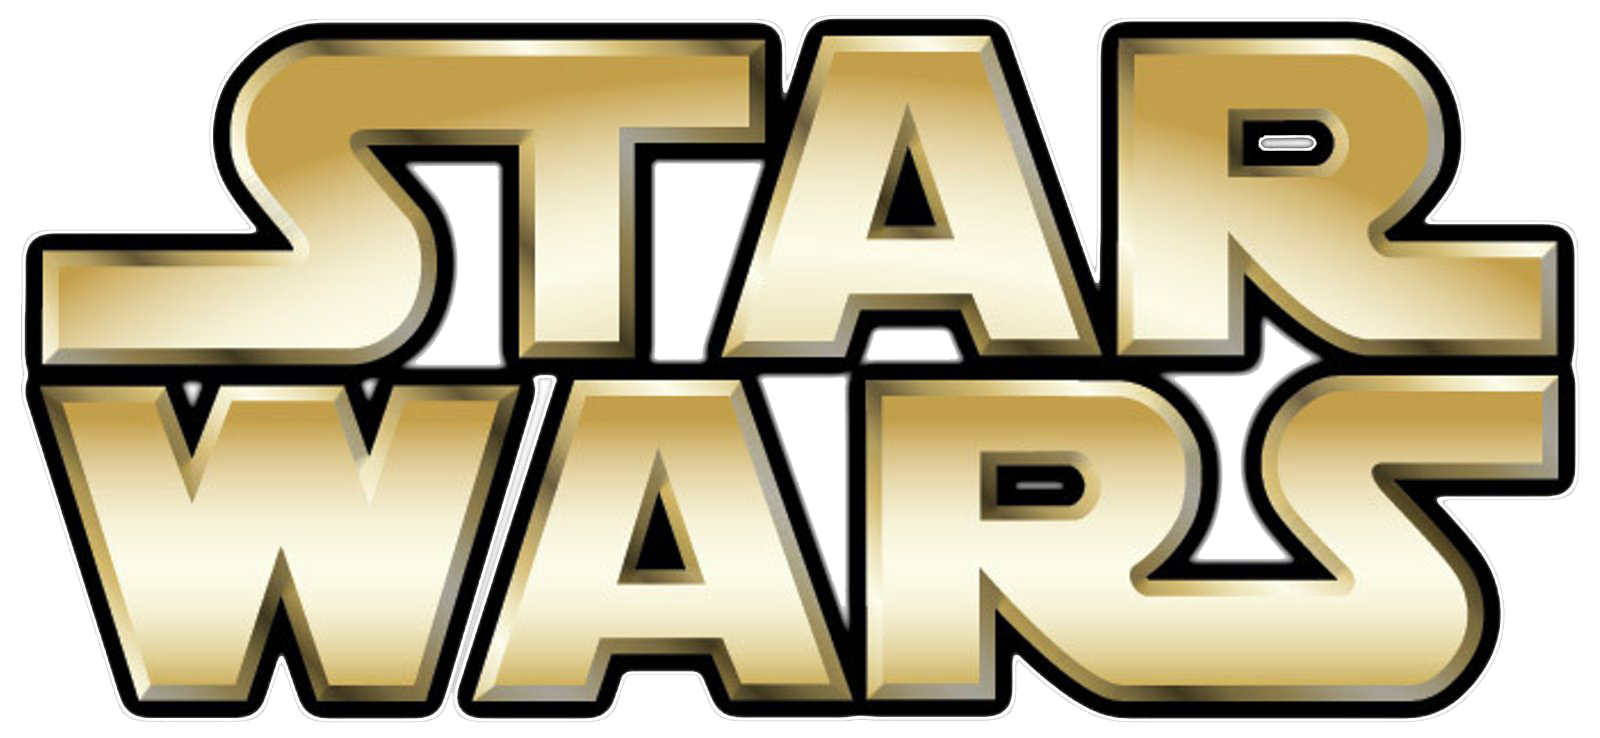 Star Wars Logo Png File - Star Wars, Transparent background PNG HD thumbnail